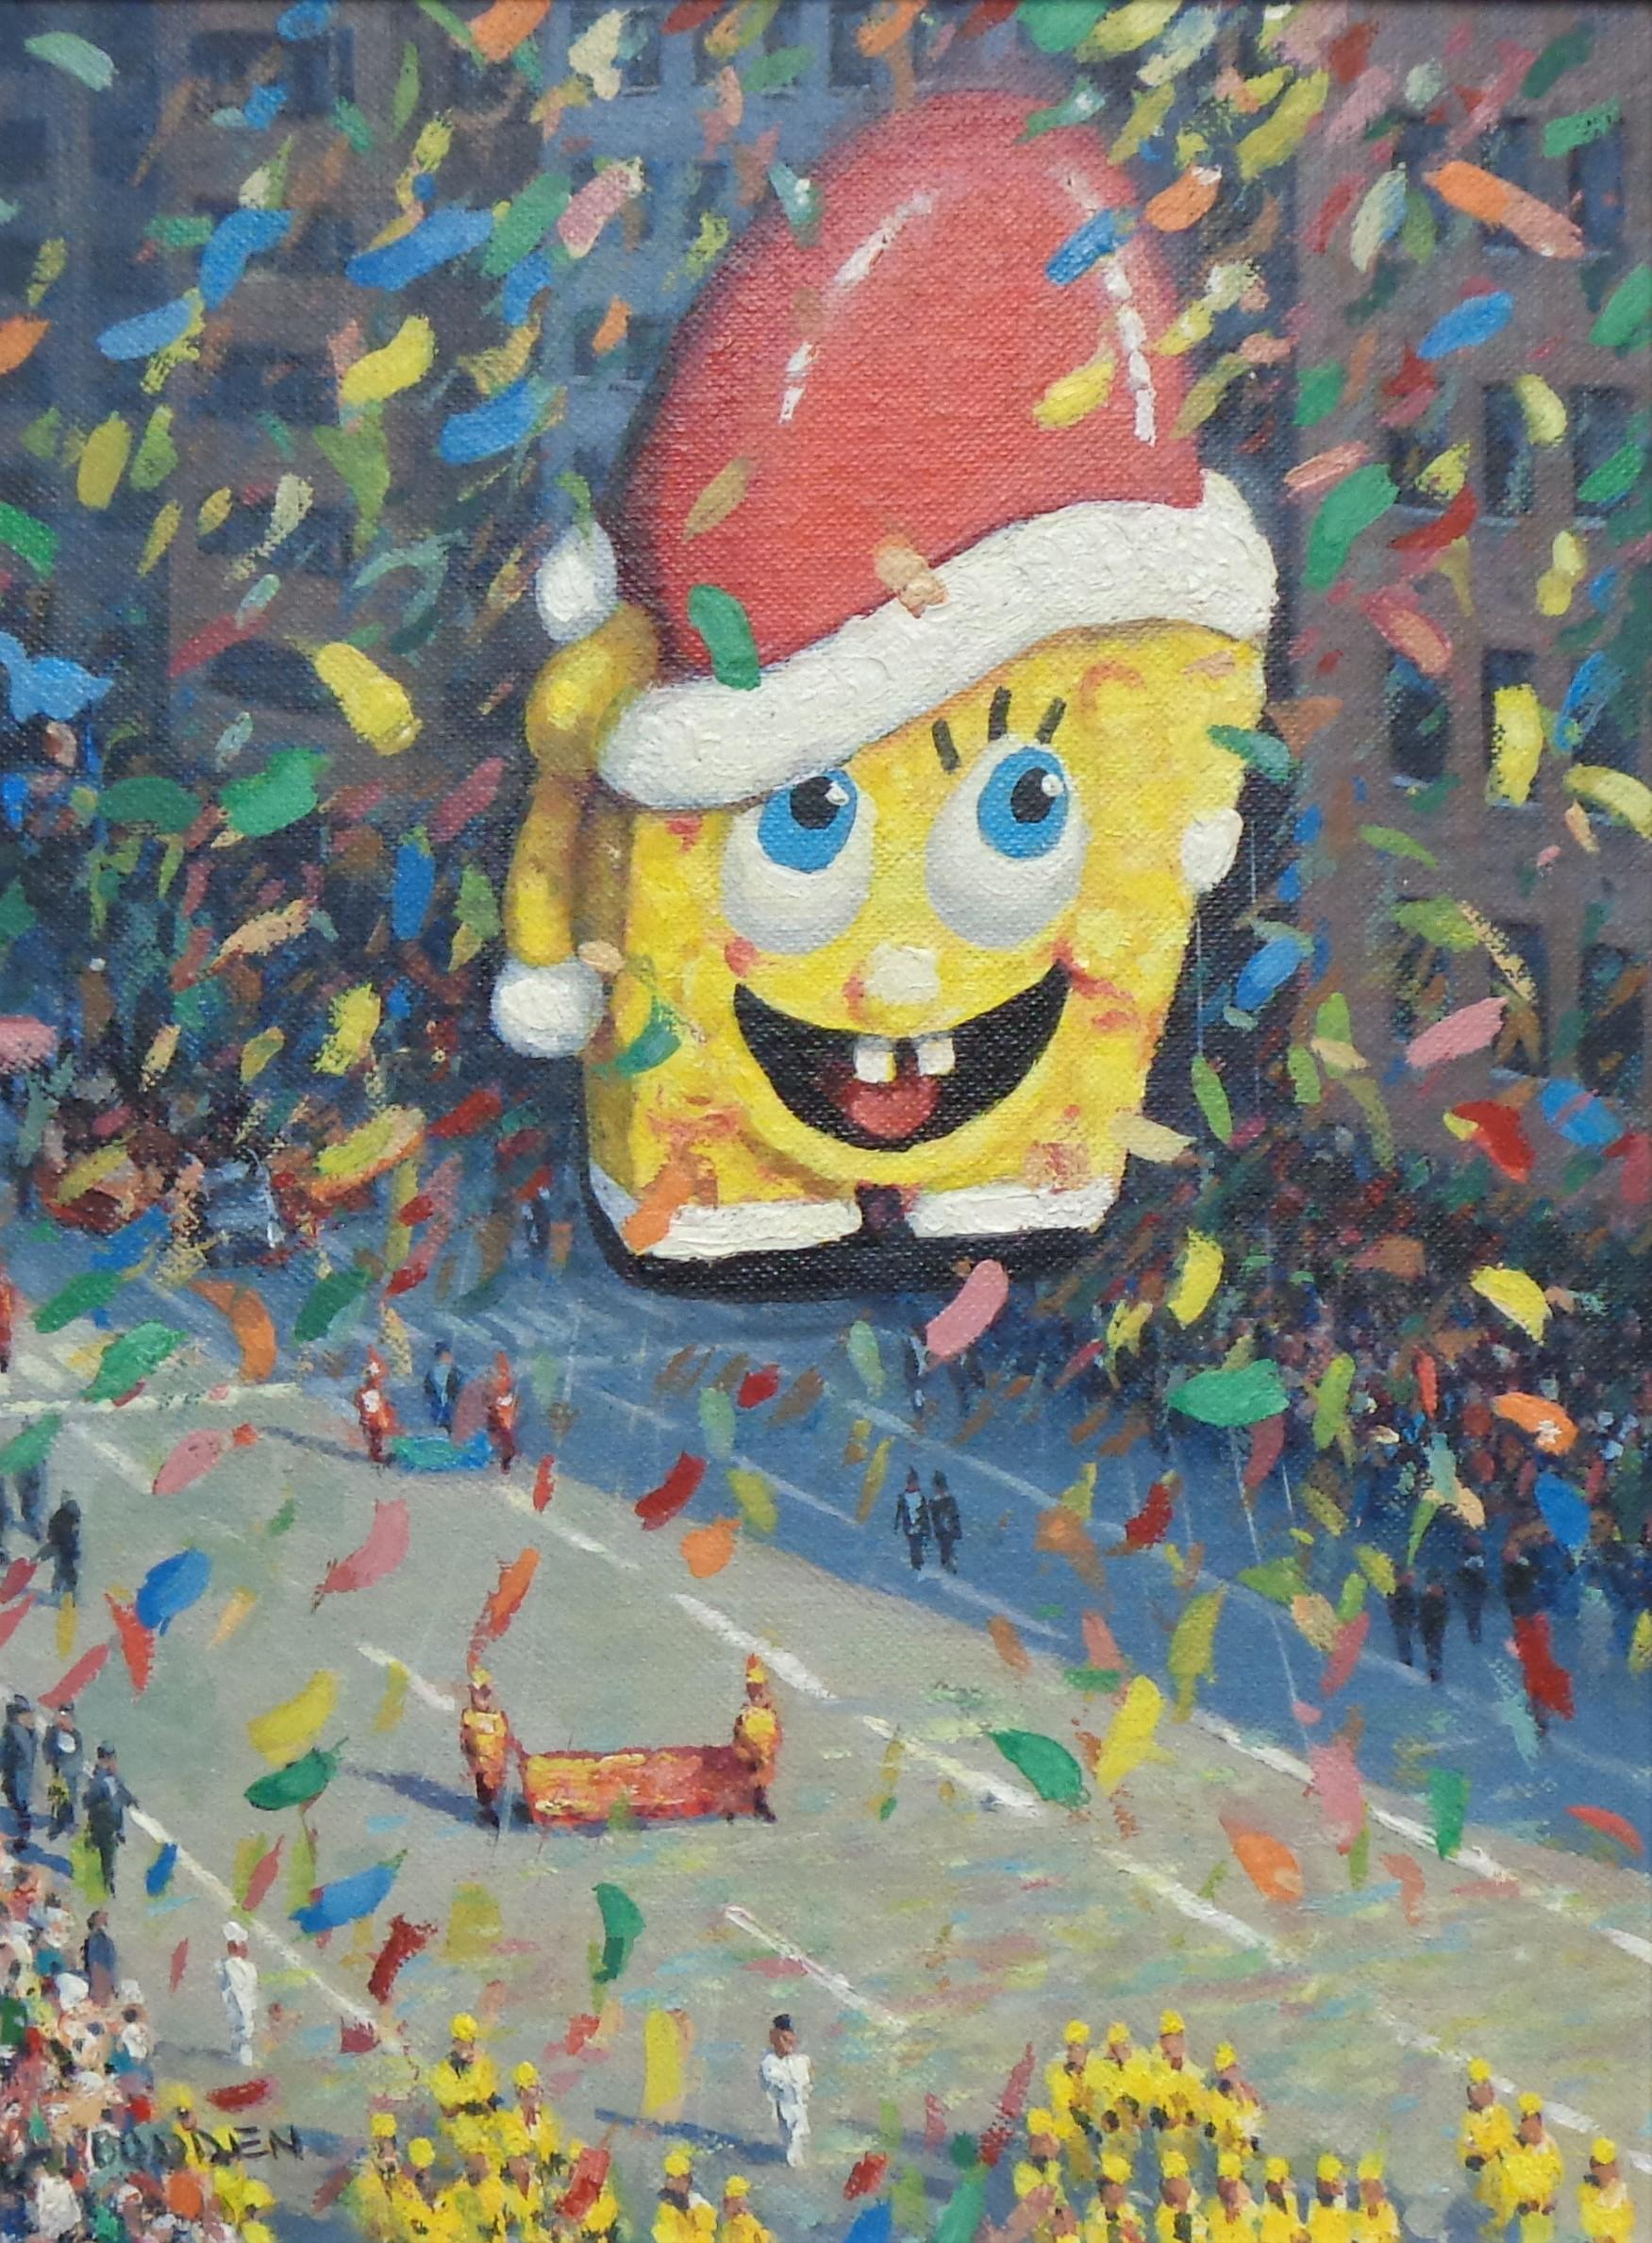   NYC Landscape Oil Painting Michael Budden Macy's Parade Series Sponge Bob For Sale 1